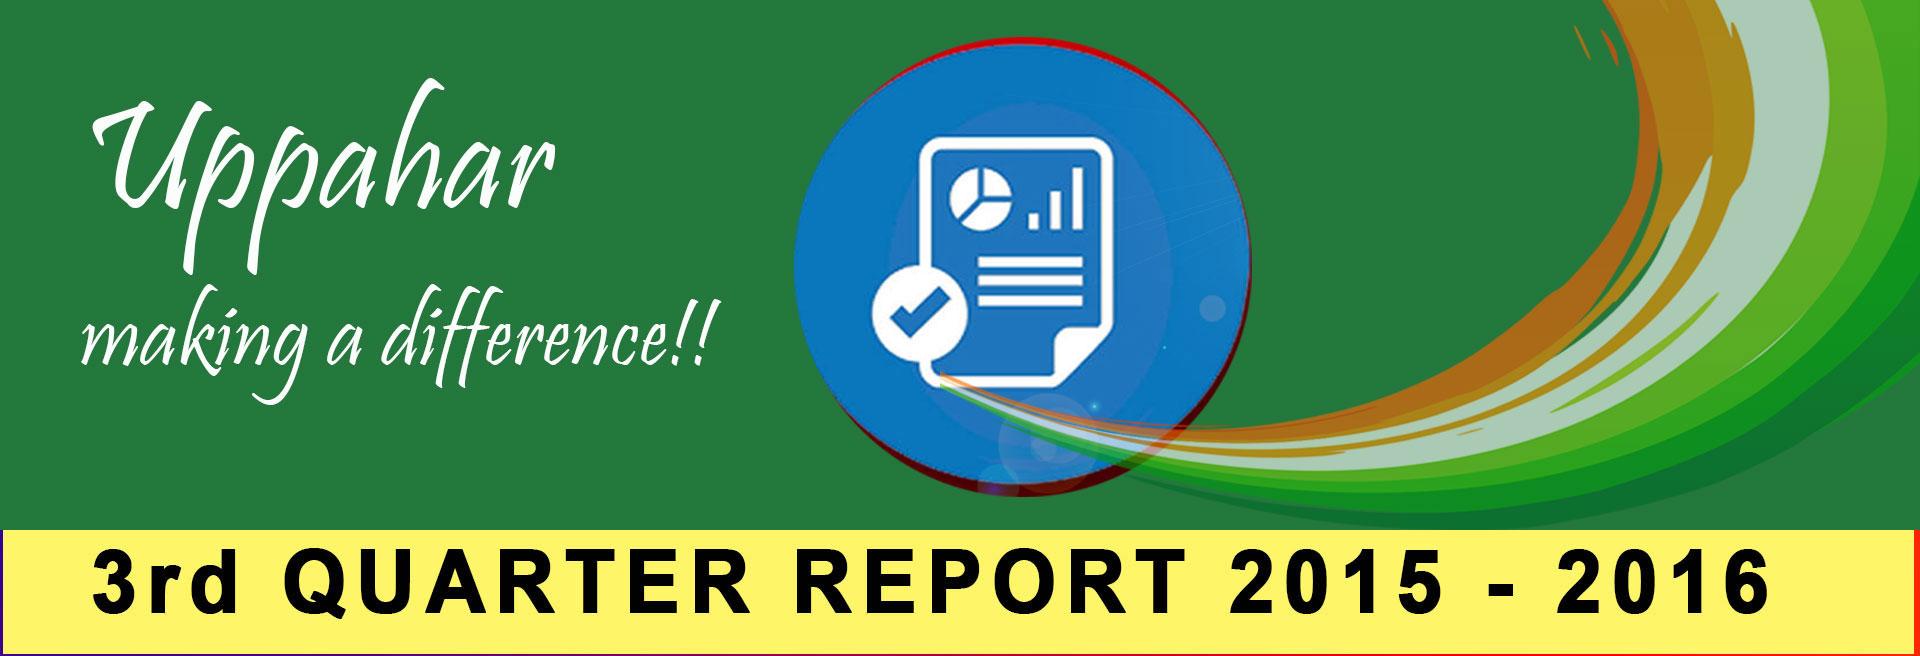 Uppahar India 3rd Quarterly Report 2015-2016